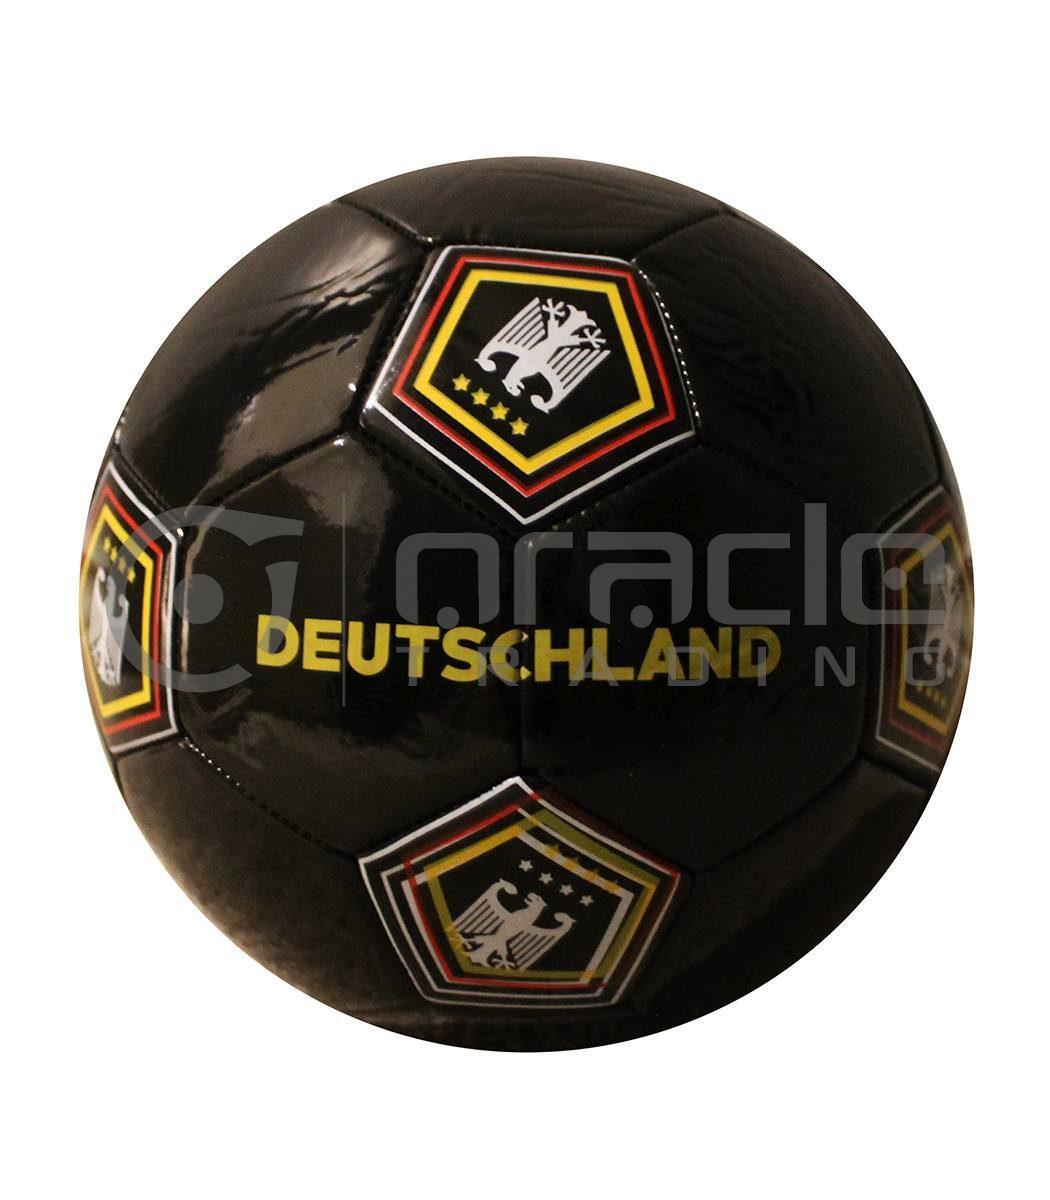 Germany Large Soccer Ball - Black